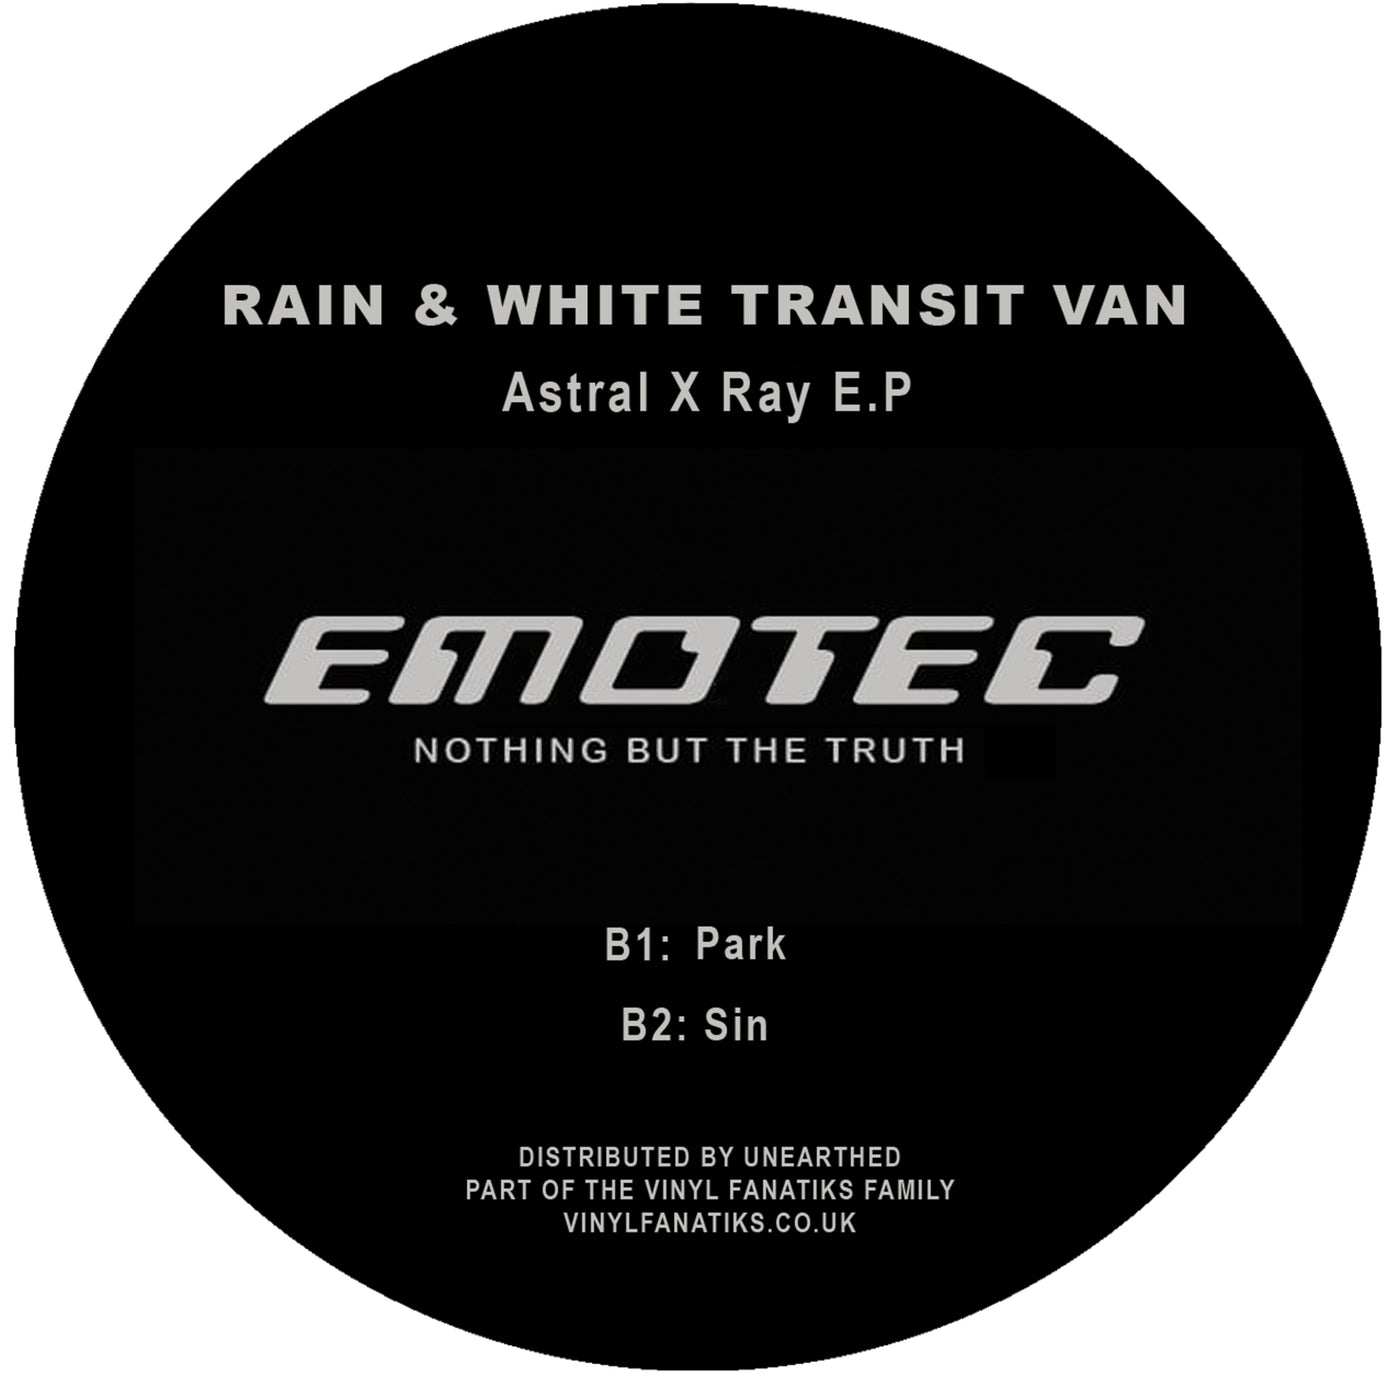 Rain & White Transit Van - Astral X-Ray EP - EMOTEC004 (12" Vinyl & Digital WAVs)